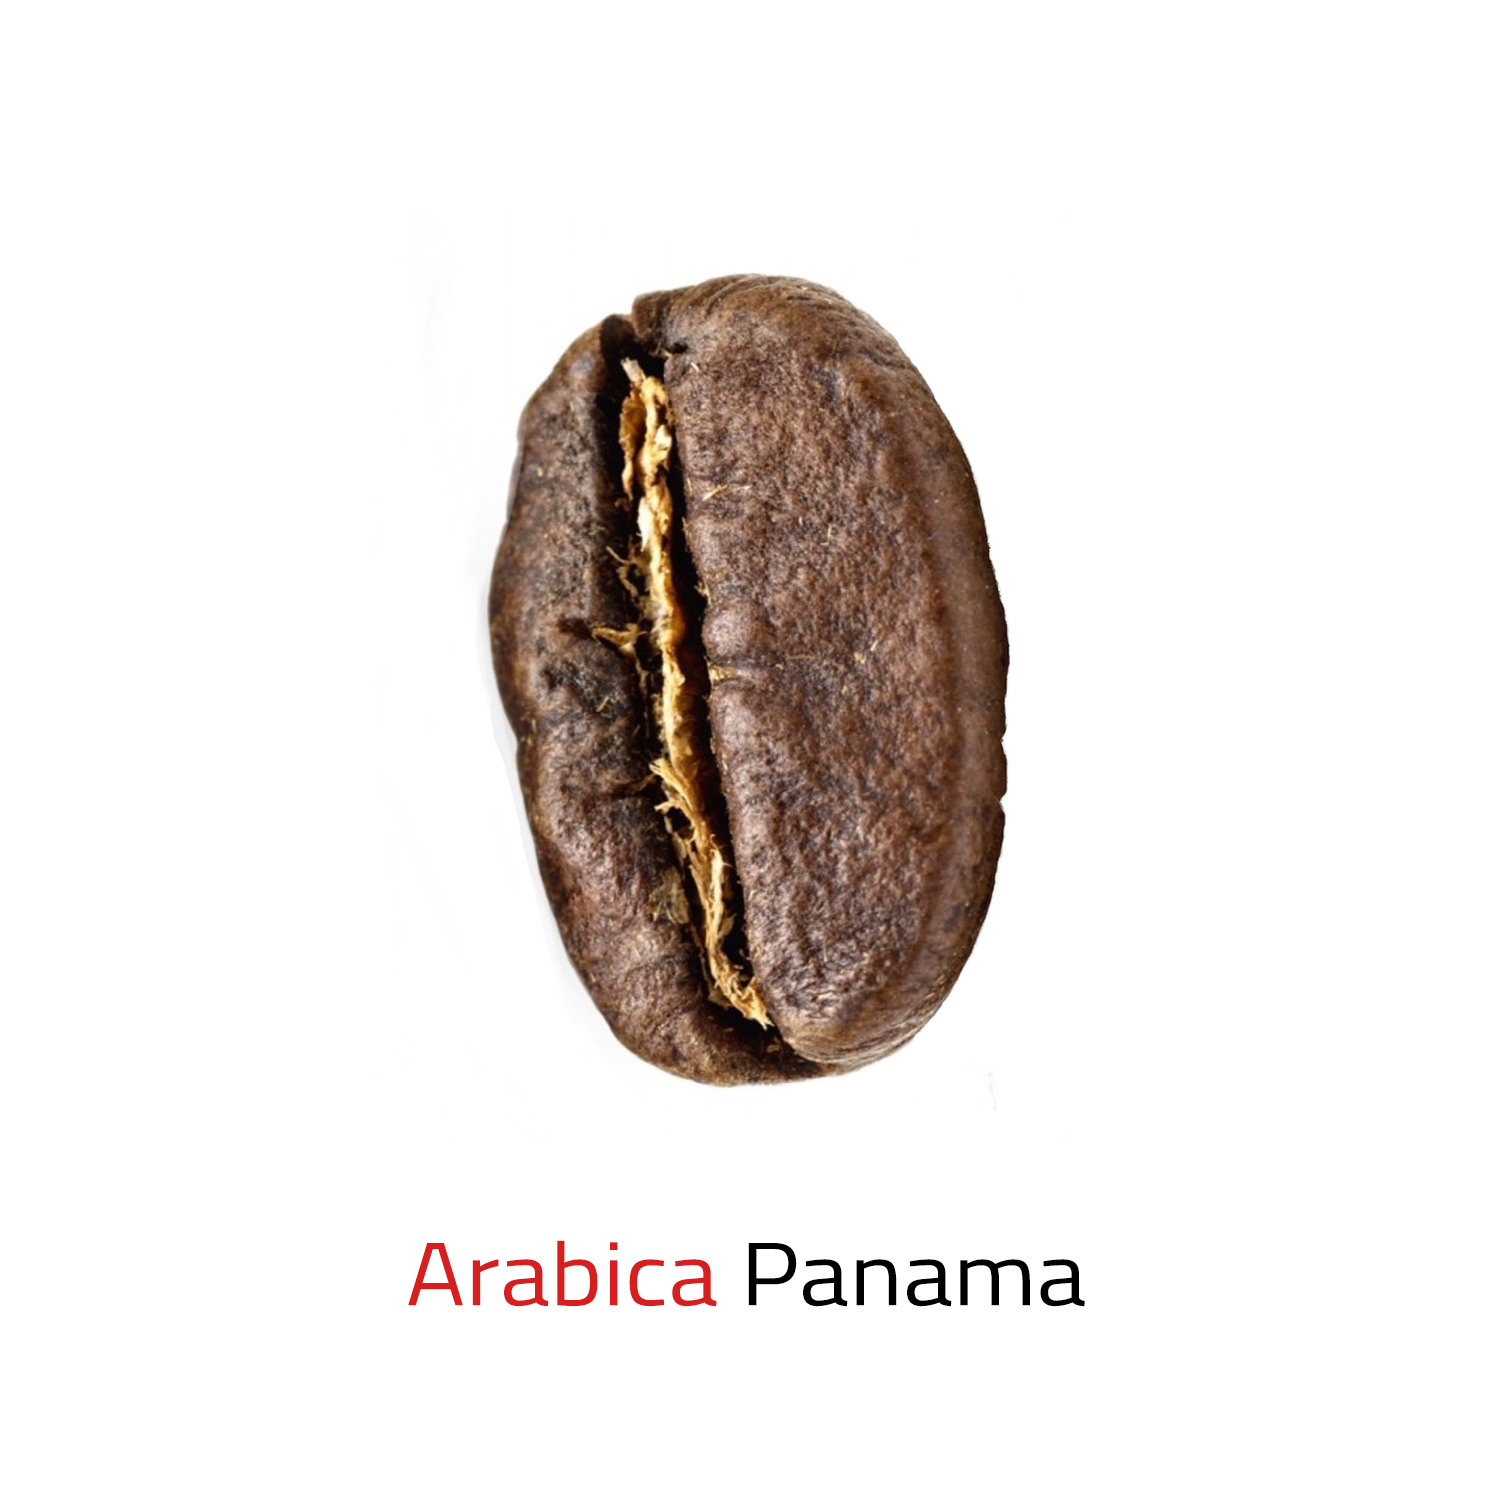 Arabica Panama 250g